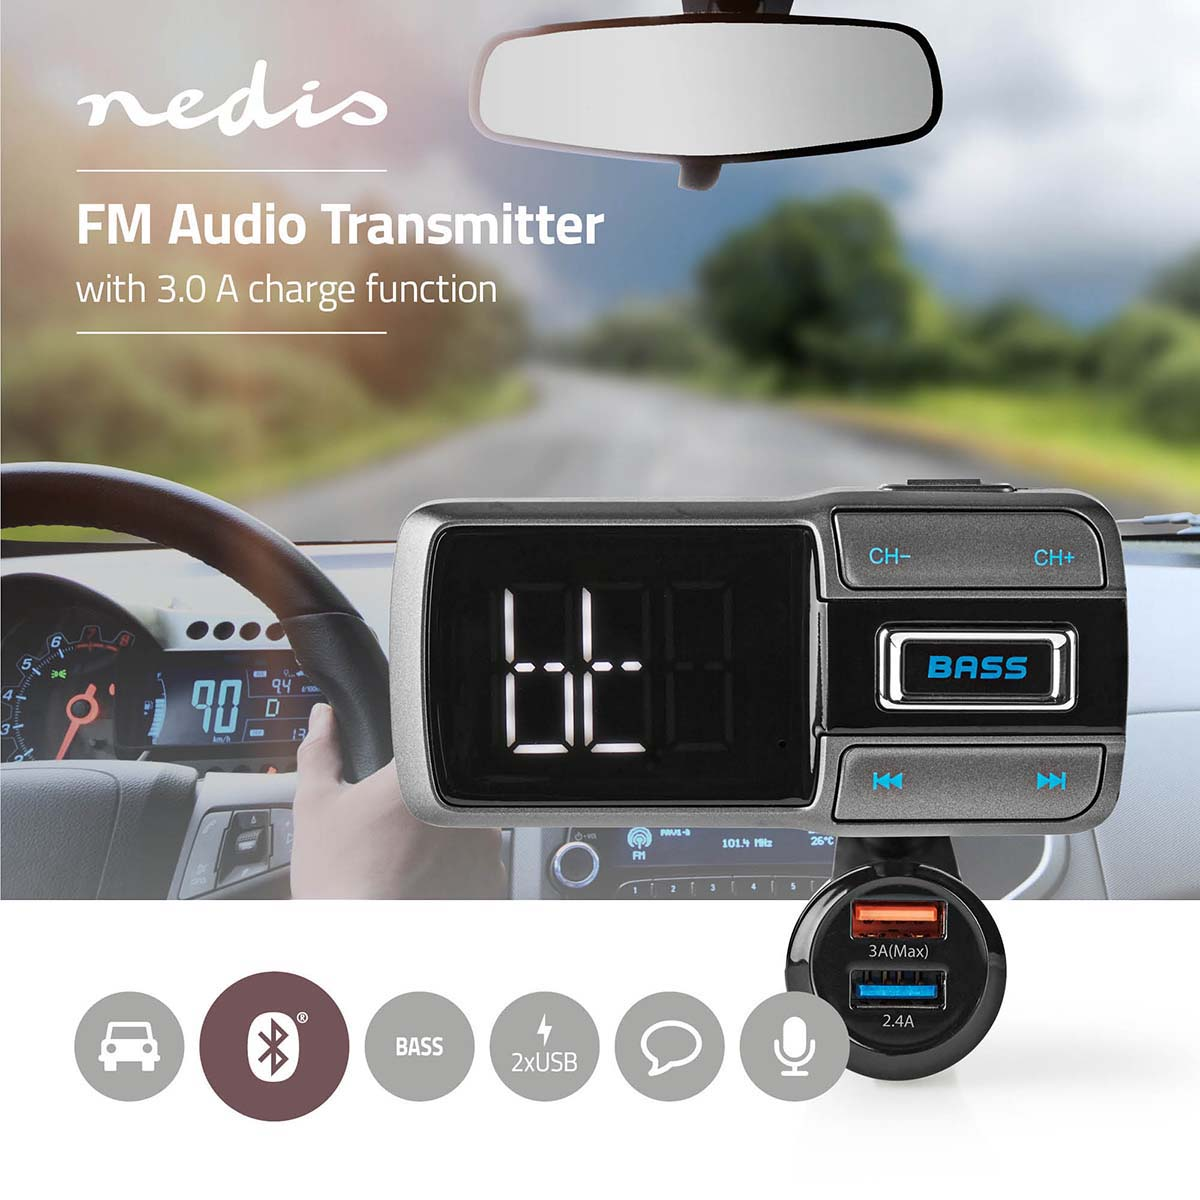 Kfz CATR101BK Schwarz NEDIS Transmitter FM Audio